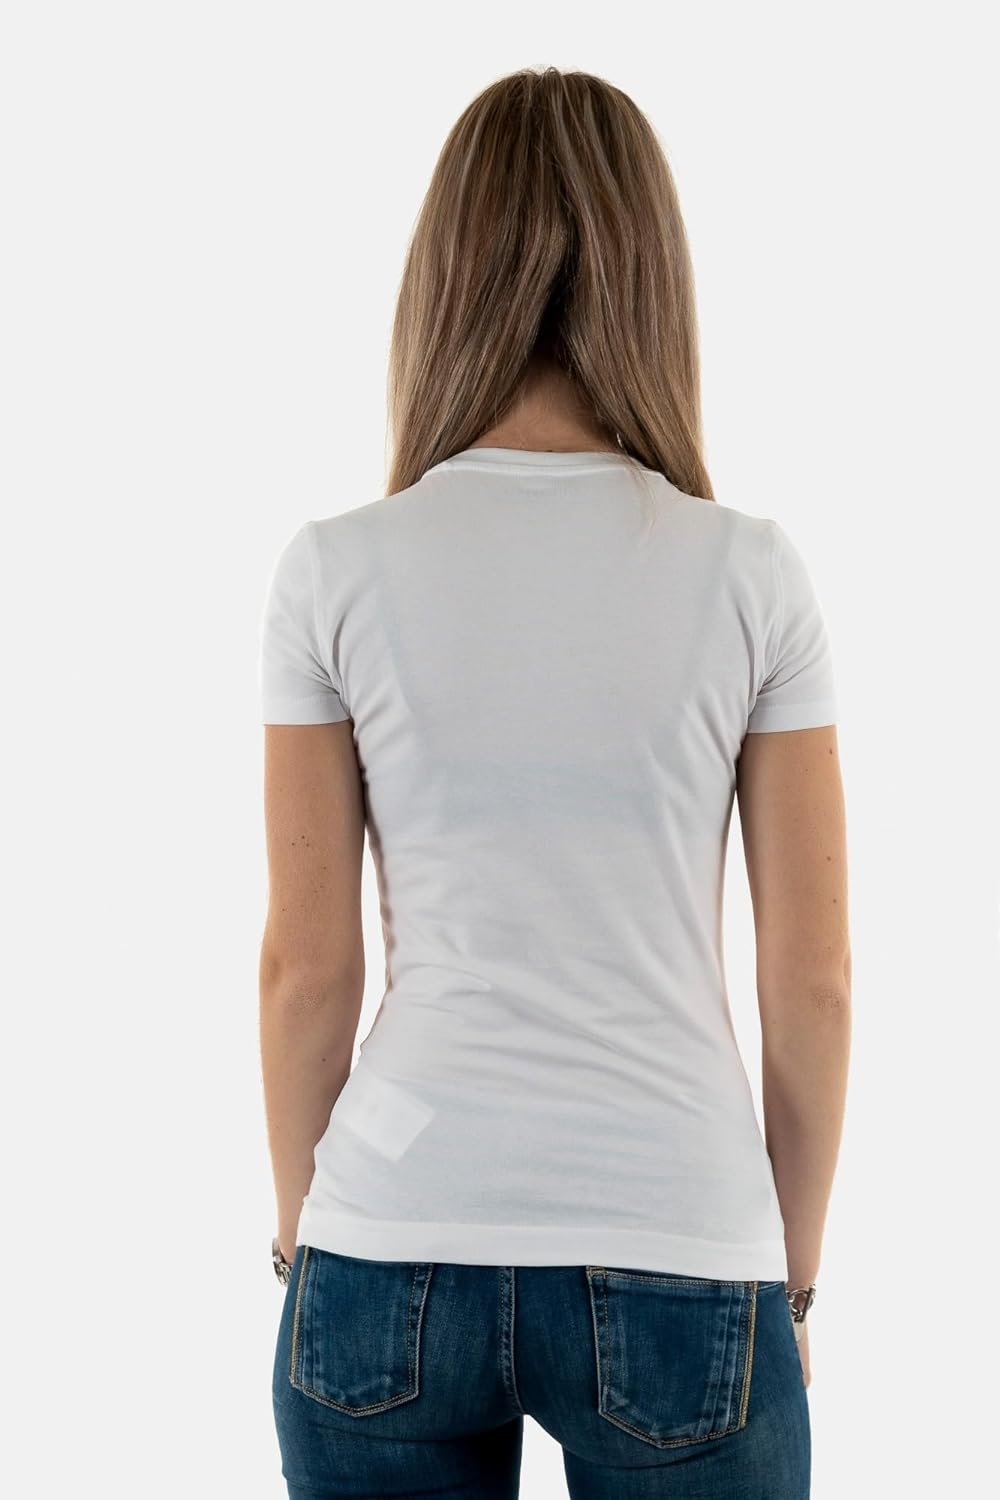 GUESS T-shirt Donna - Bianco